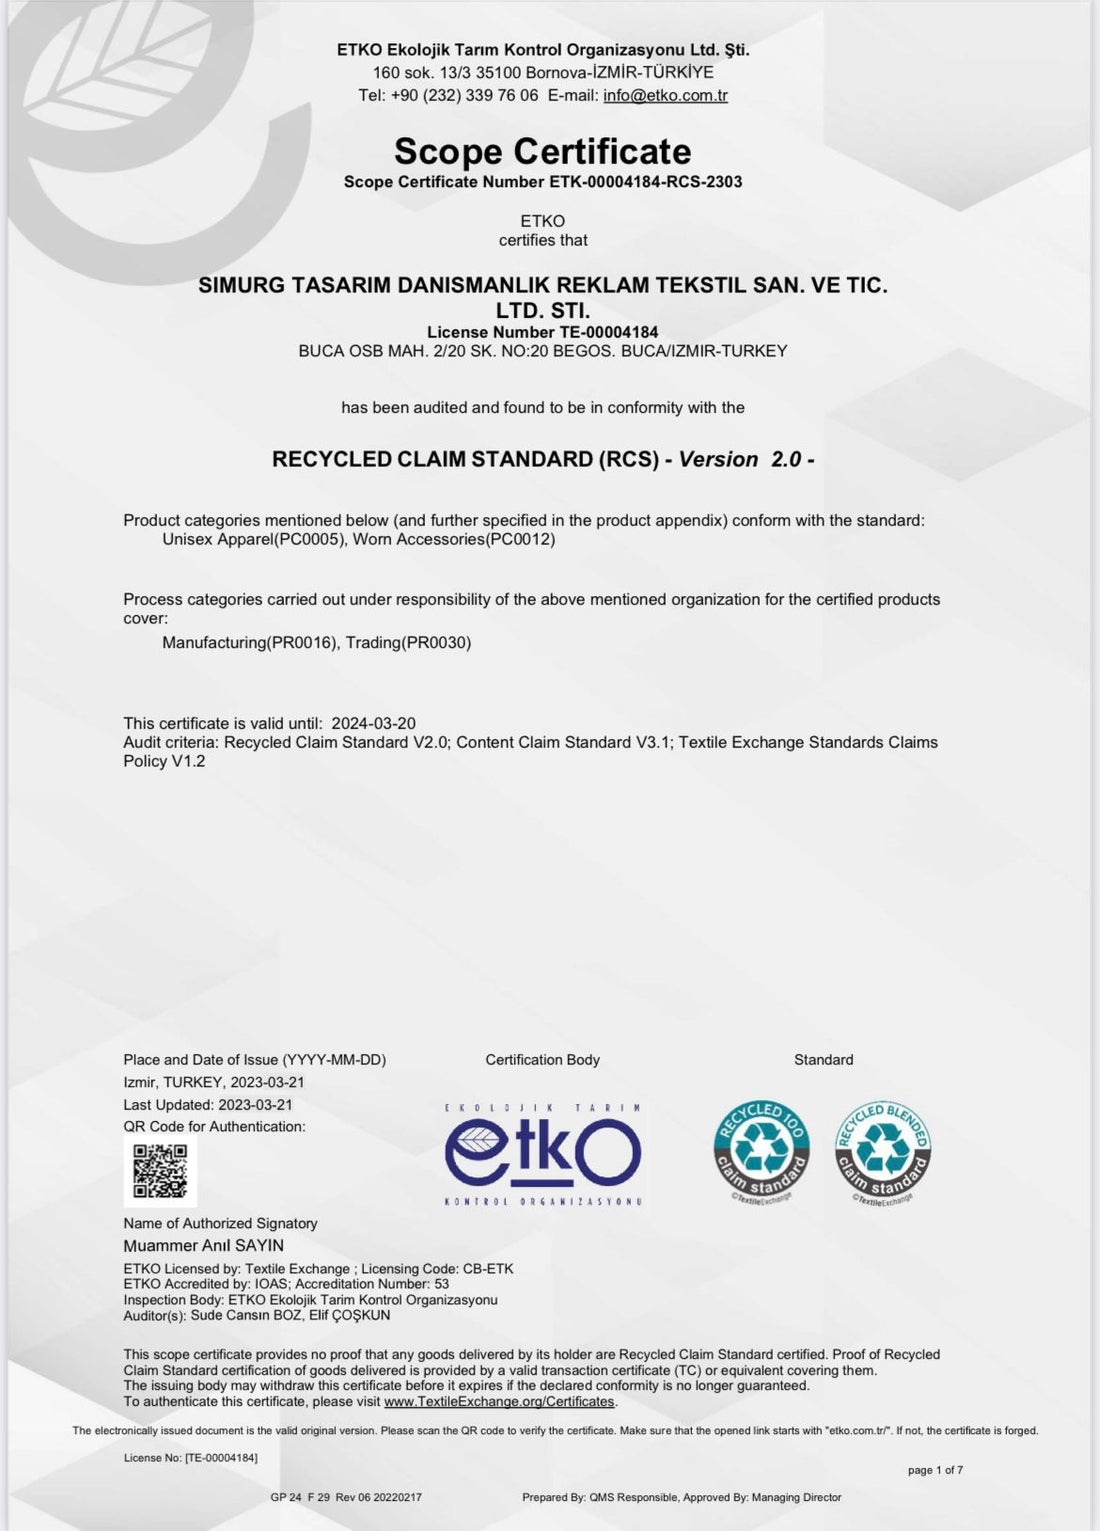 Recycled Claim Standard (RCS) - Version 2.0 -